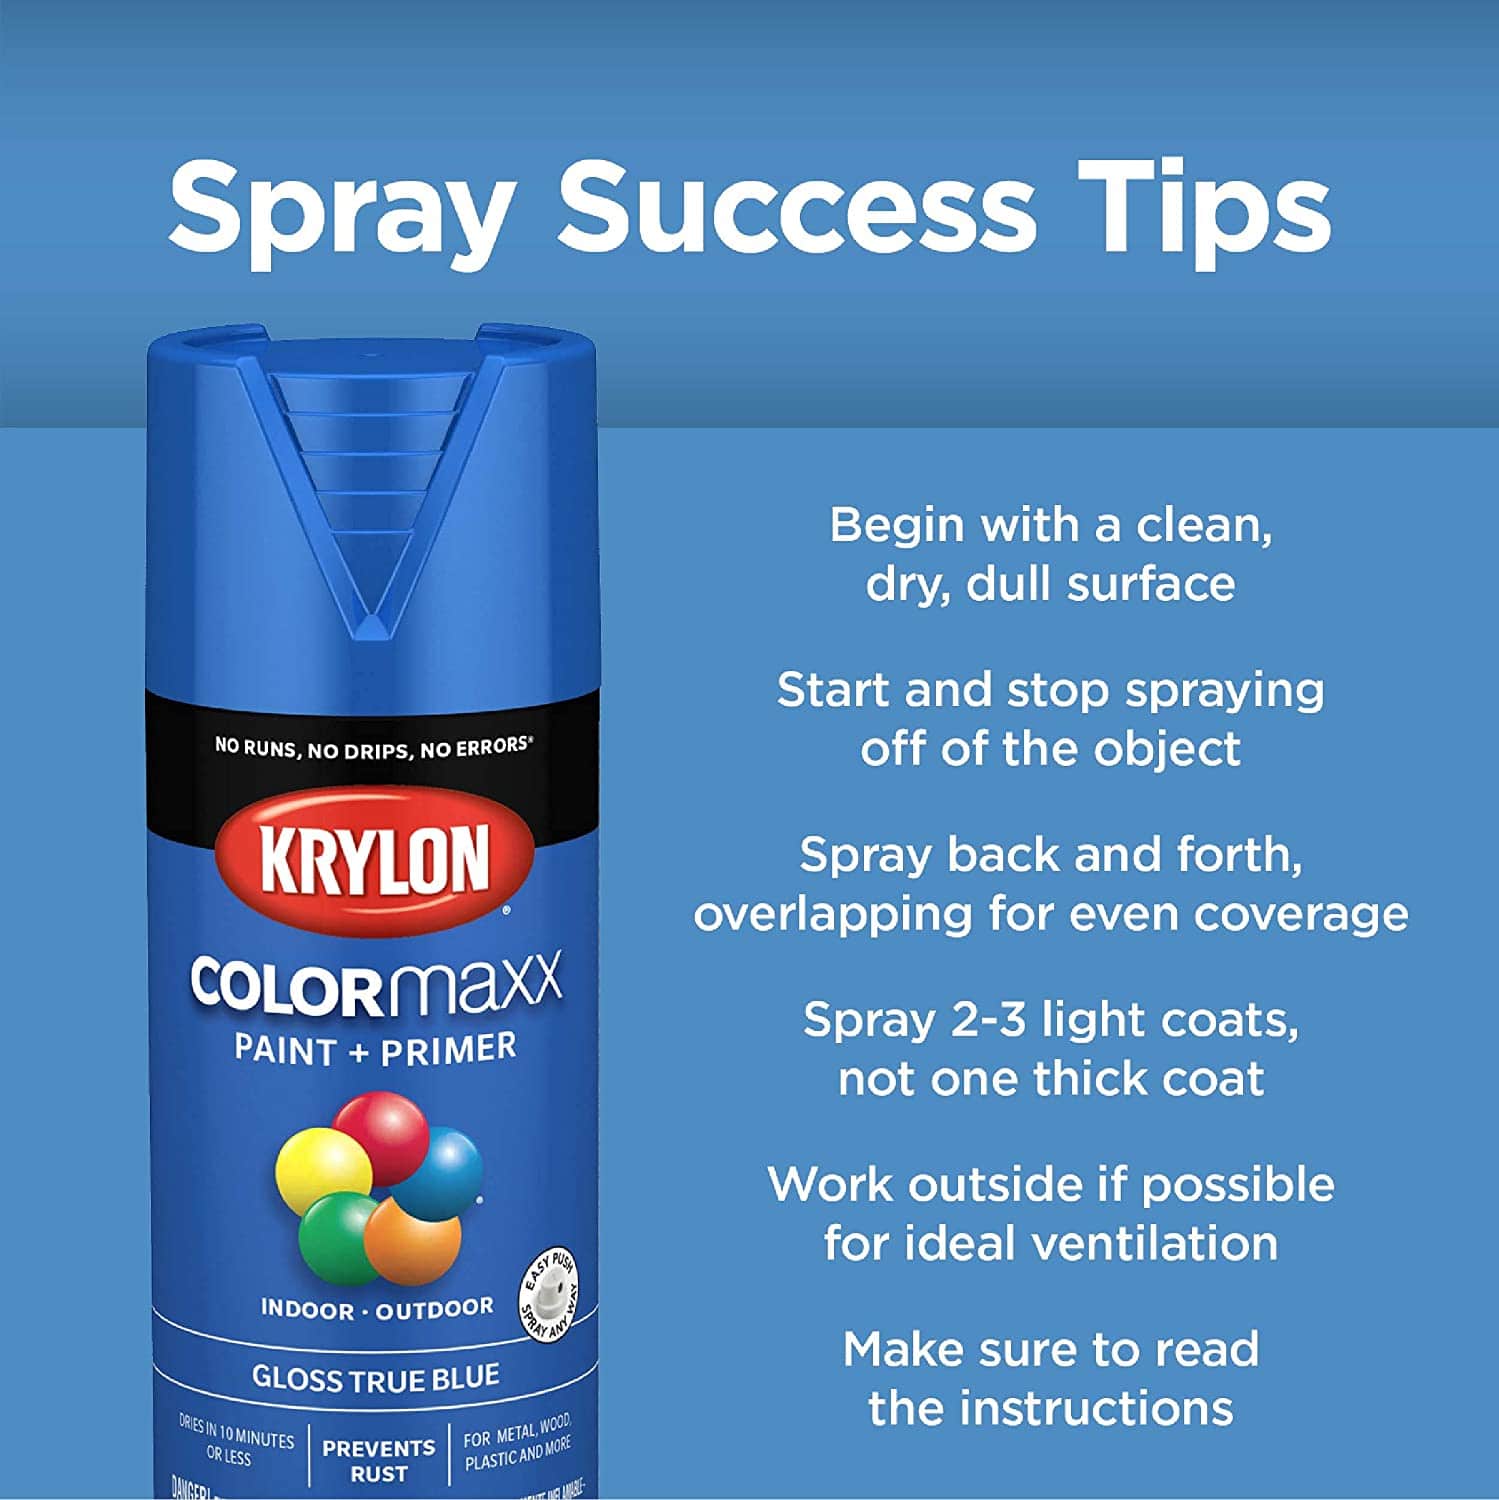 Krylon K05588007 COLORmaxx Spray Paint and Primer tips